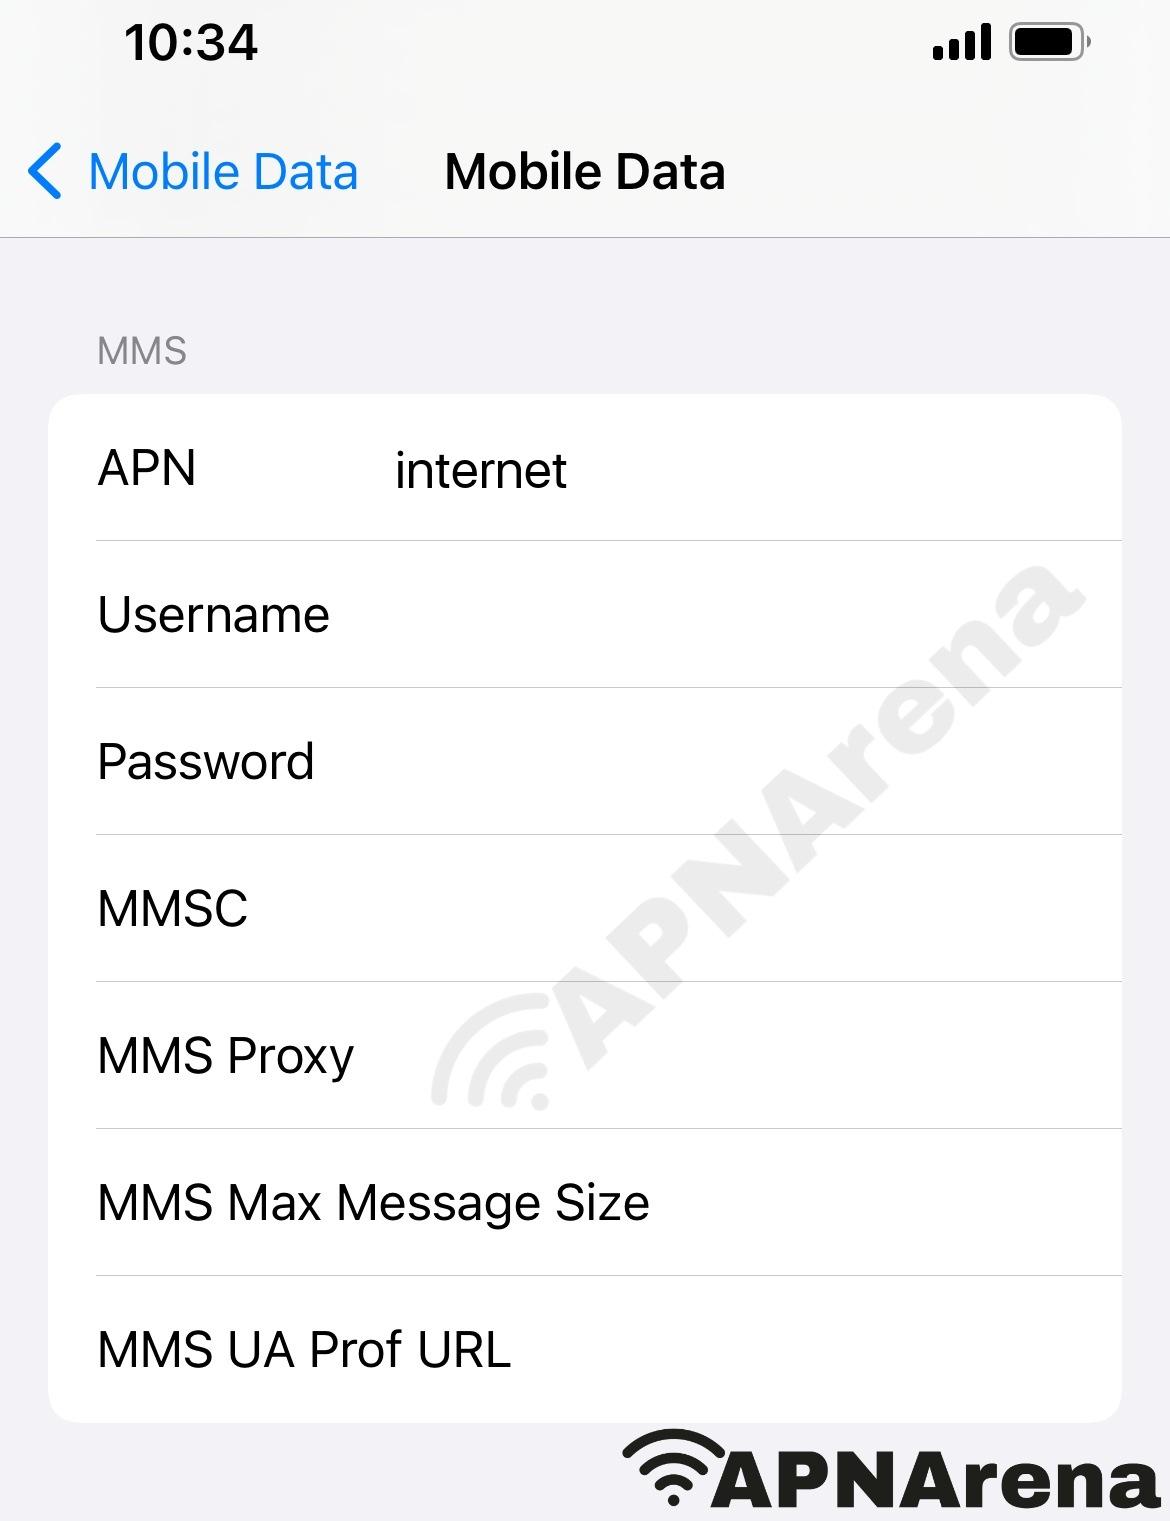 MeU mobile MMS Settings for iPhone